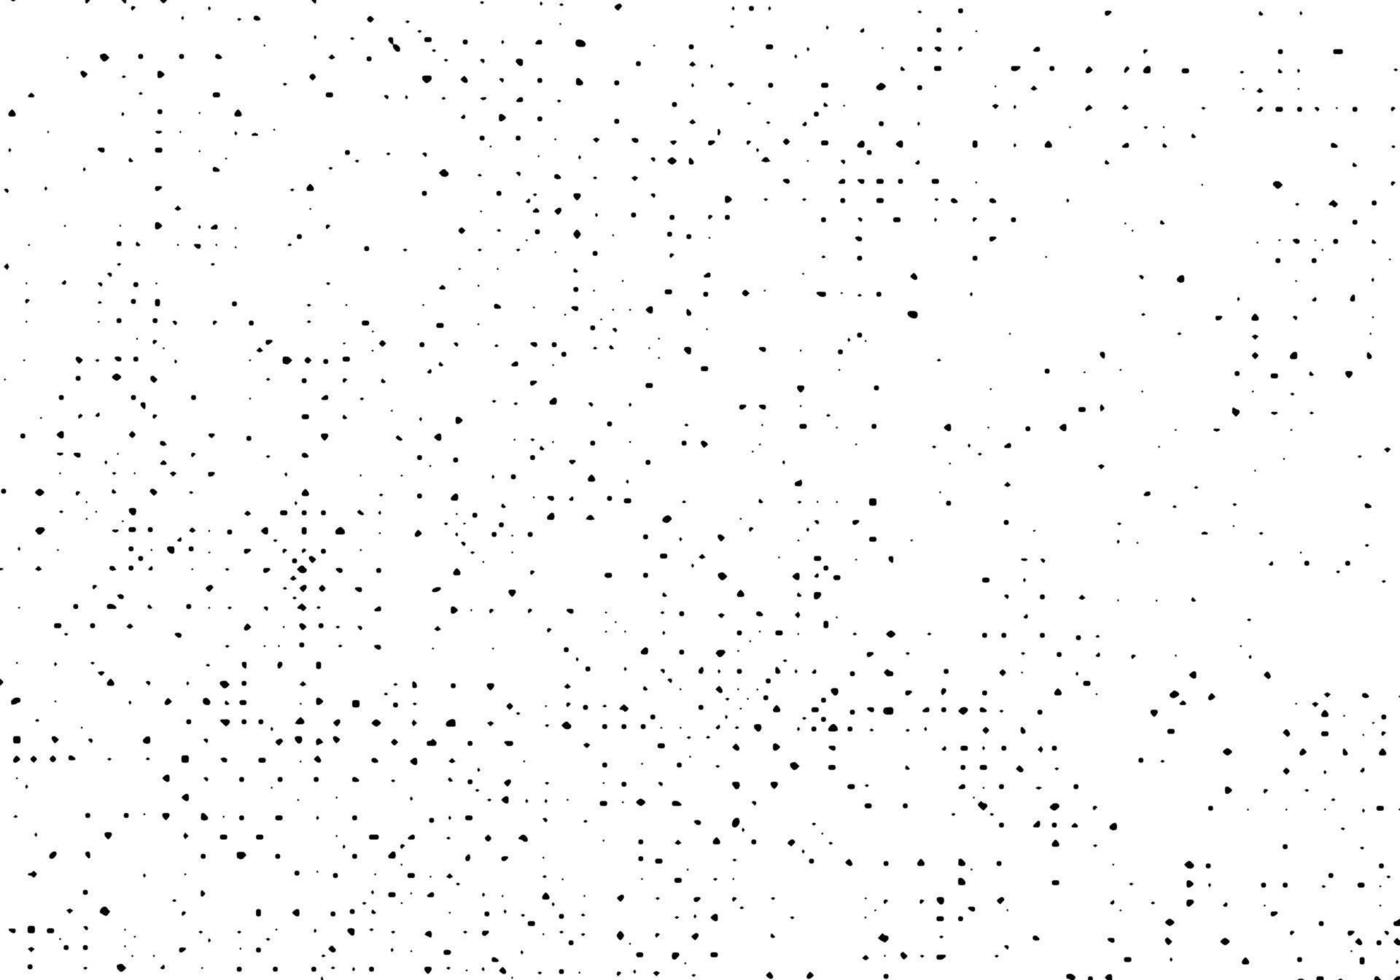 patrón de fondo grunge, vector de superposición de textura de angustia antigua, diseño áspero de semitono de impresión